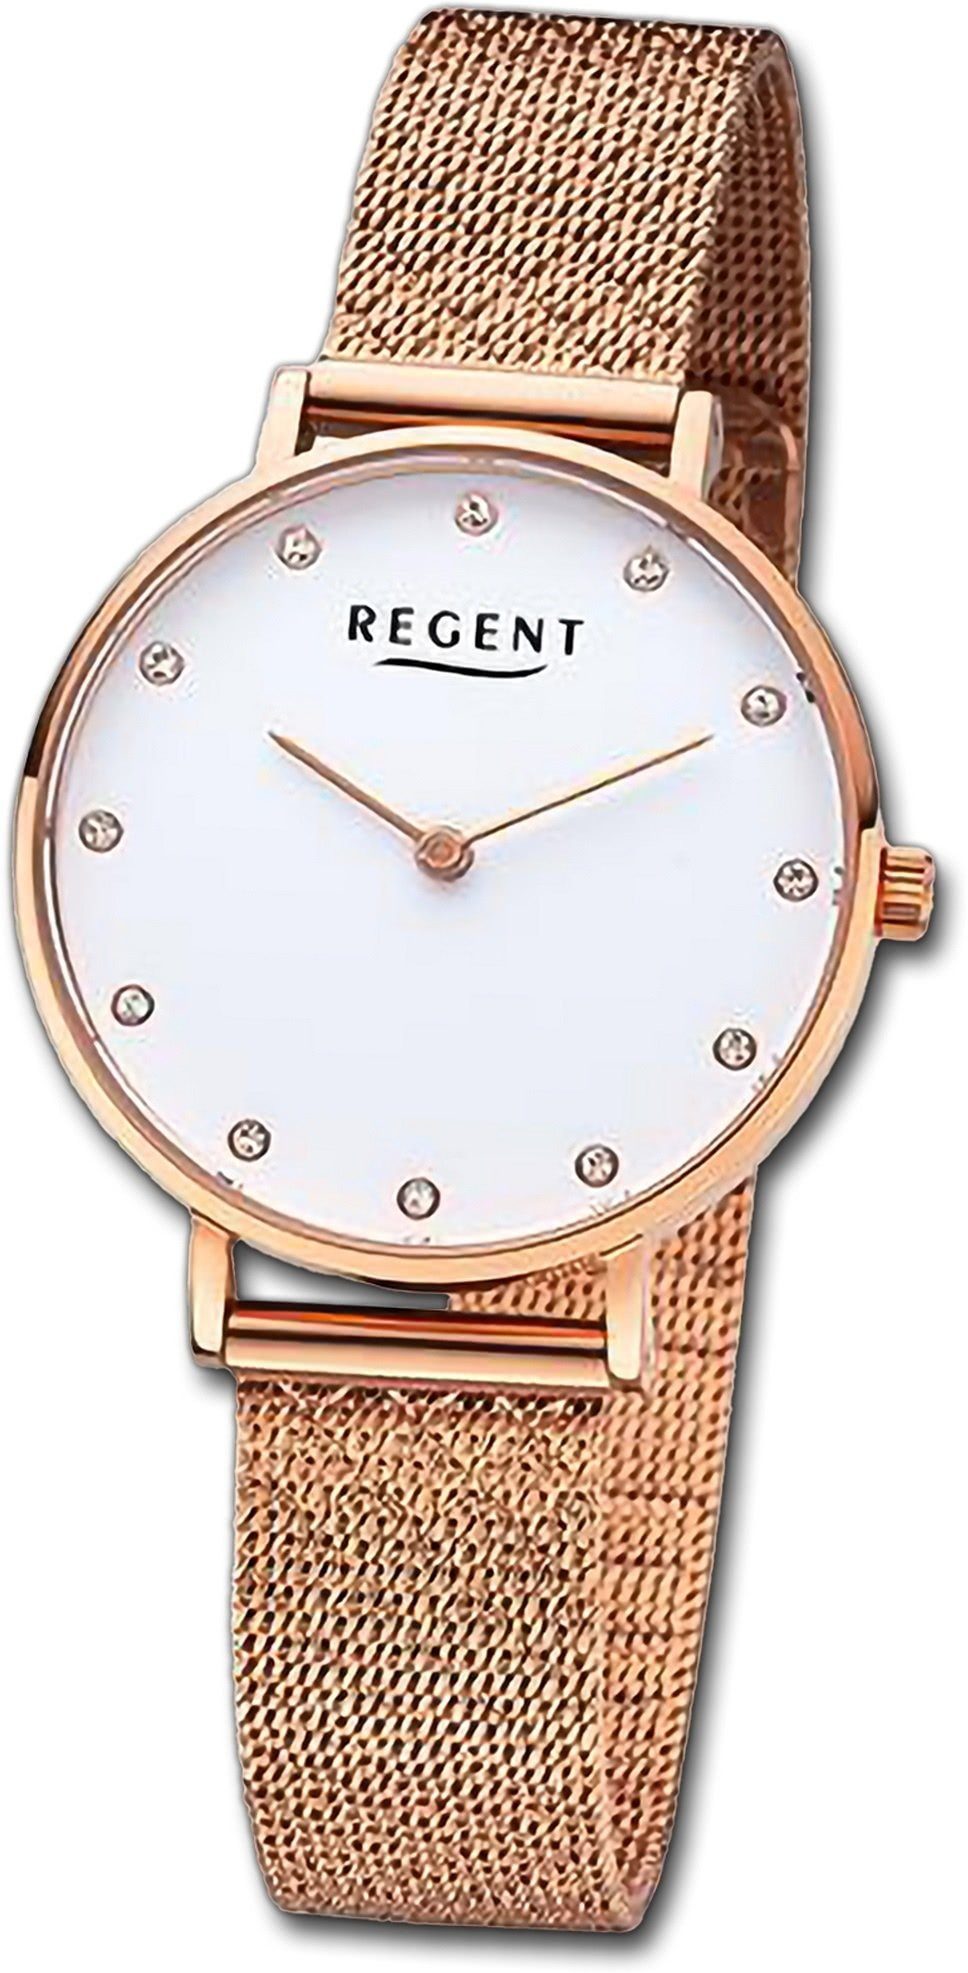 Quarzuhr Damen Damenuhr Armbanduhr Regent Metallarmband rundes Gehäuse, rosegold, extra 32mm) Regent (ca. groß Analog,